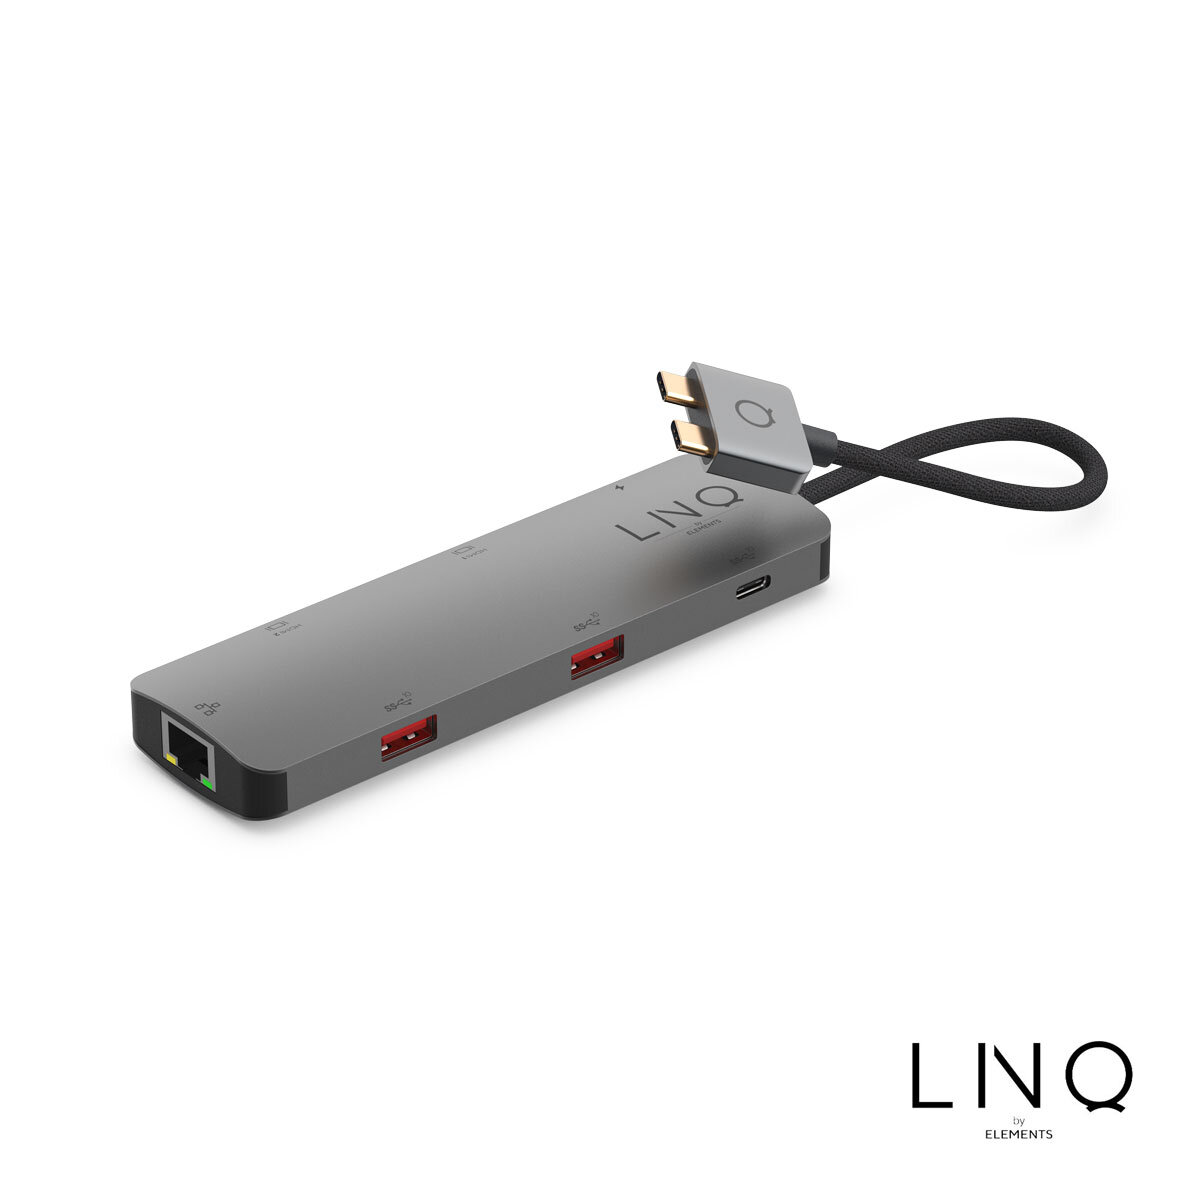 LINQ 7in2 D2 Pro MST USB-C Multiport Hub